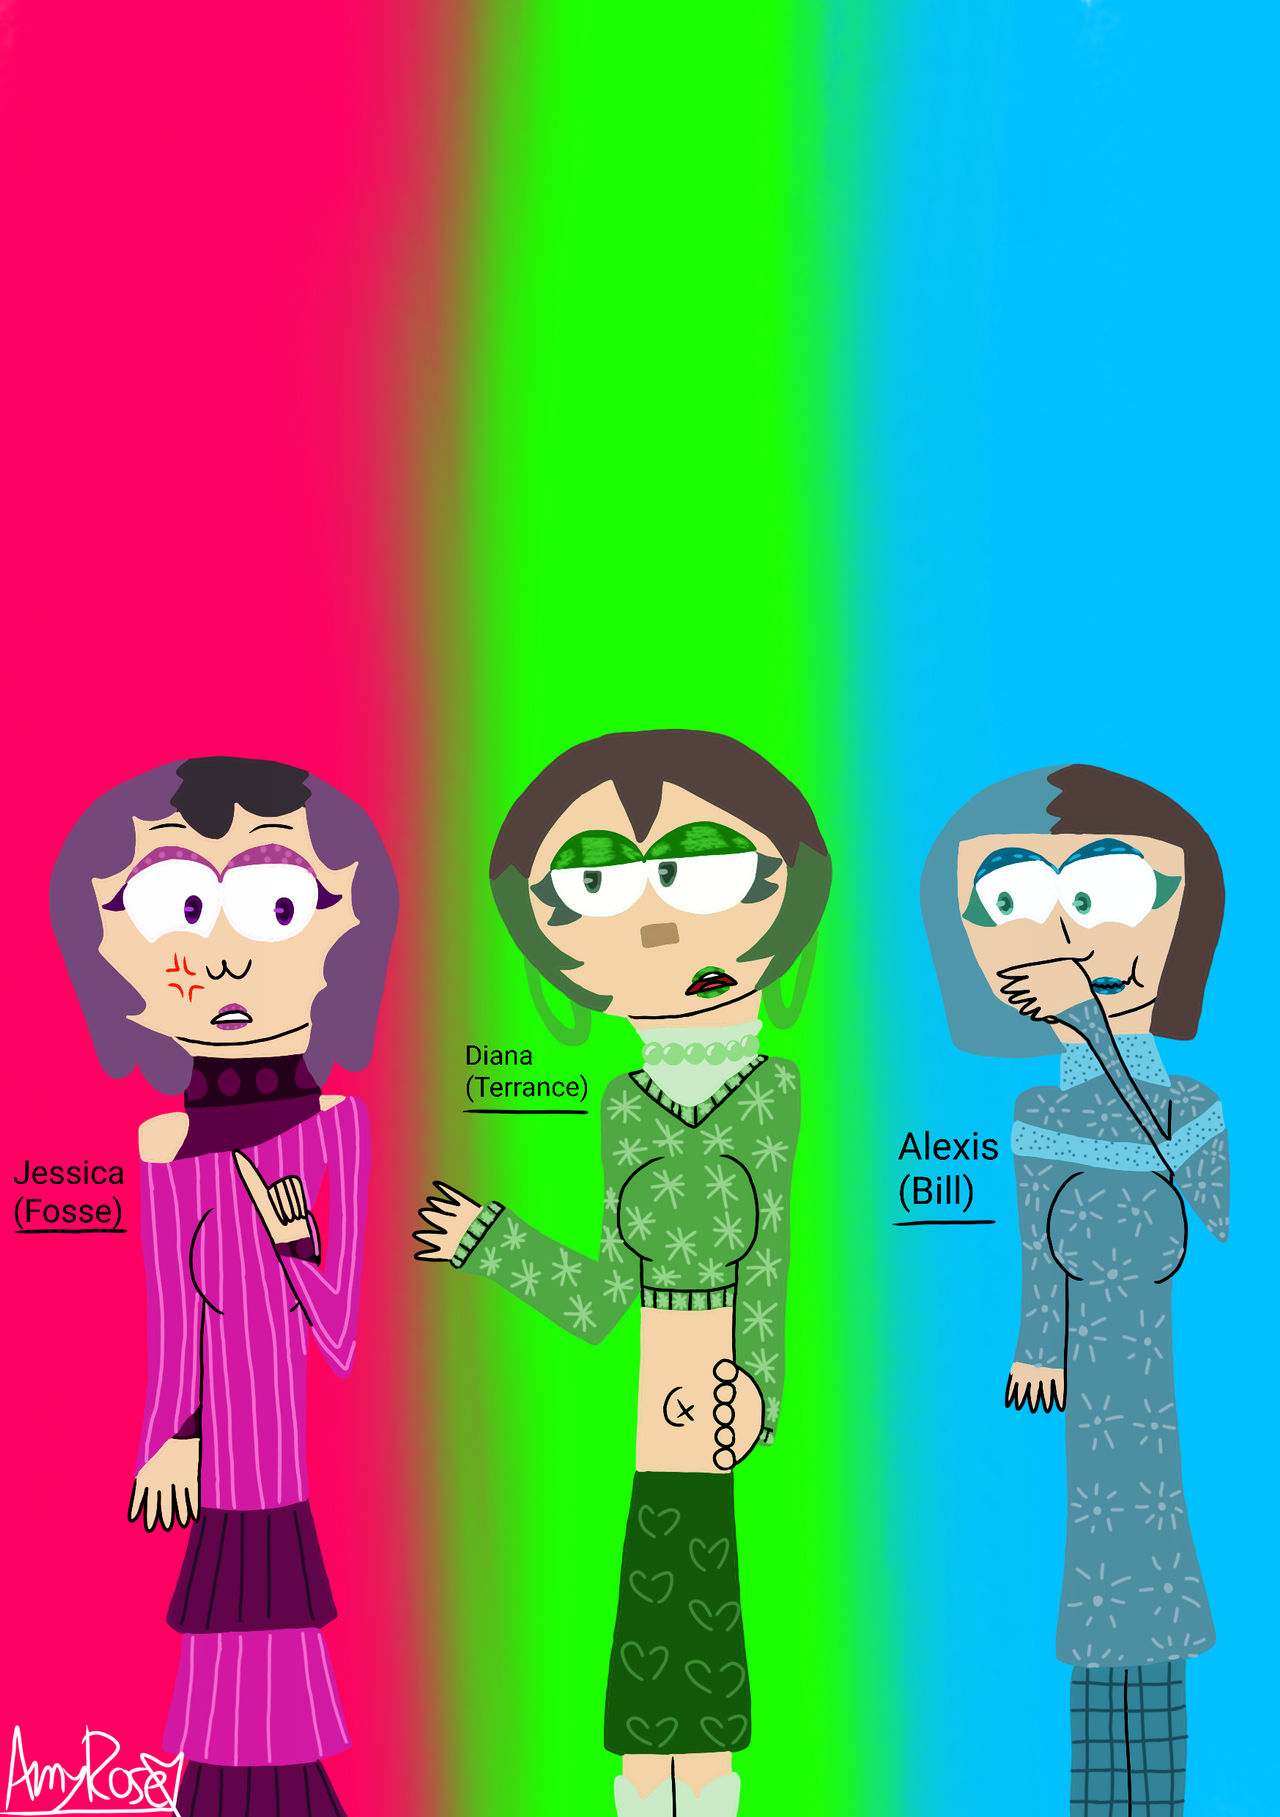 Rainbow friends (Green slight redesign) by Deltaheartsstuff on DeviantArt